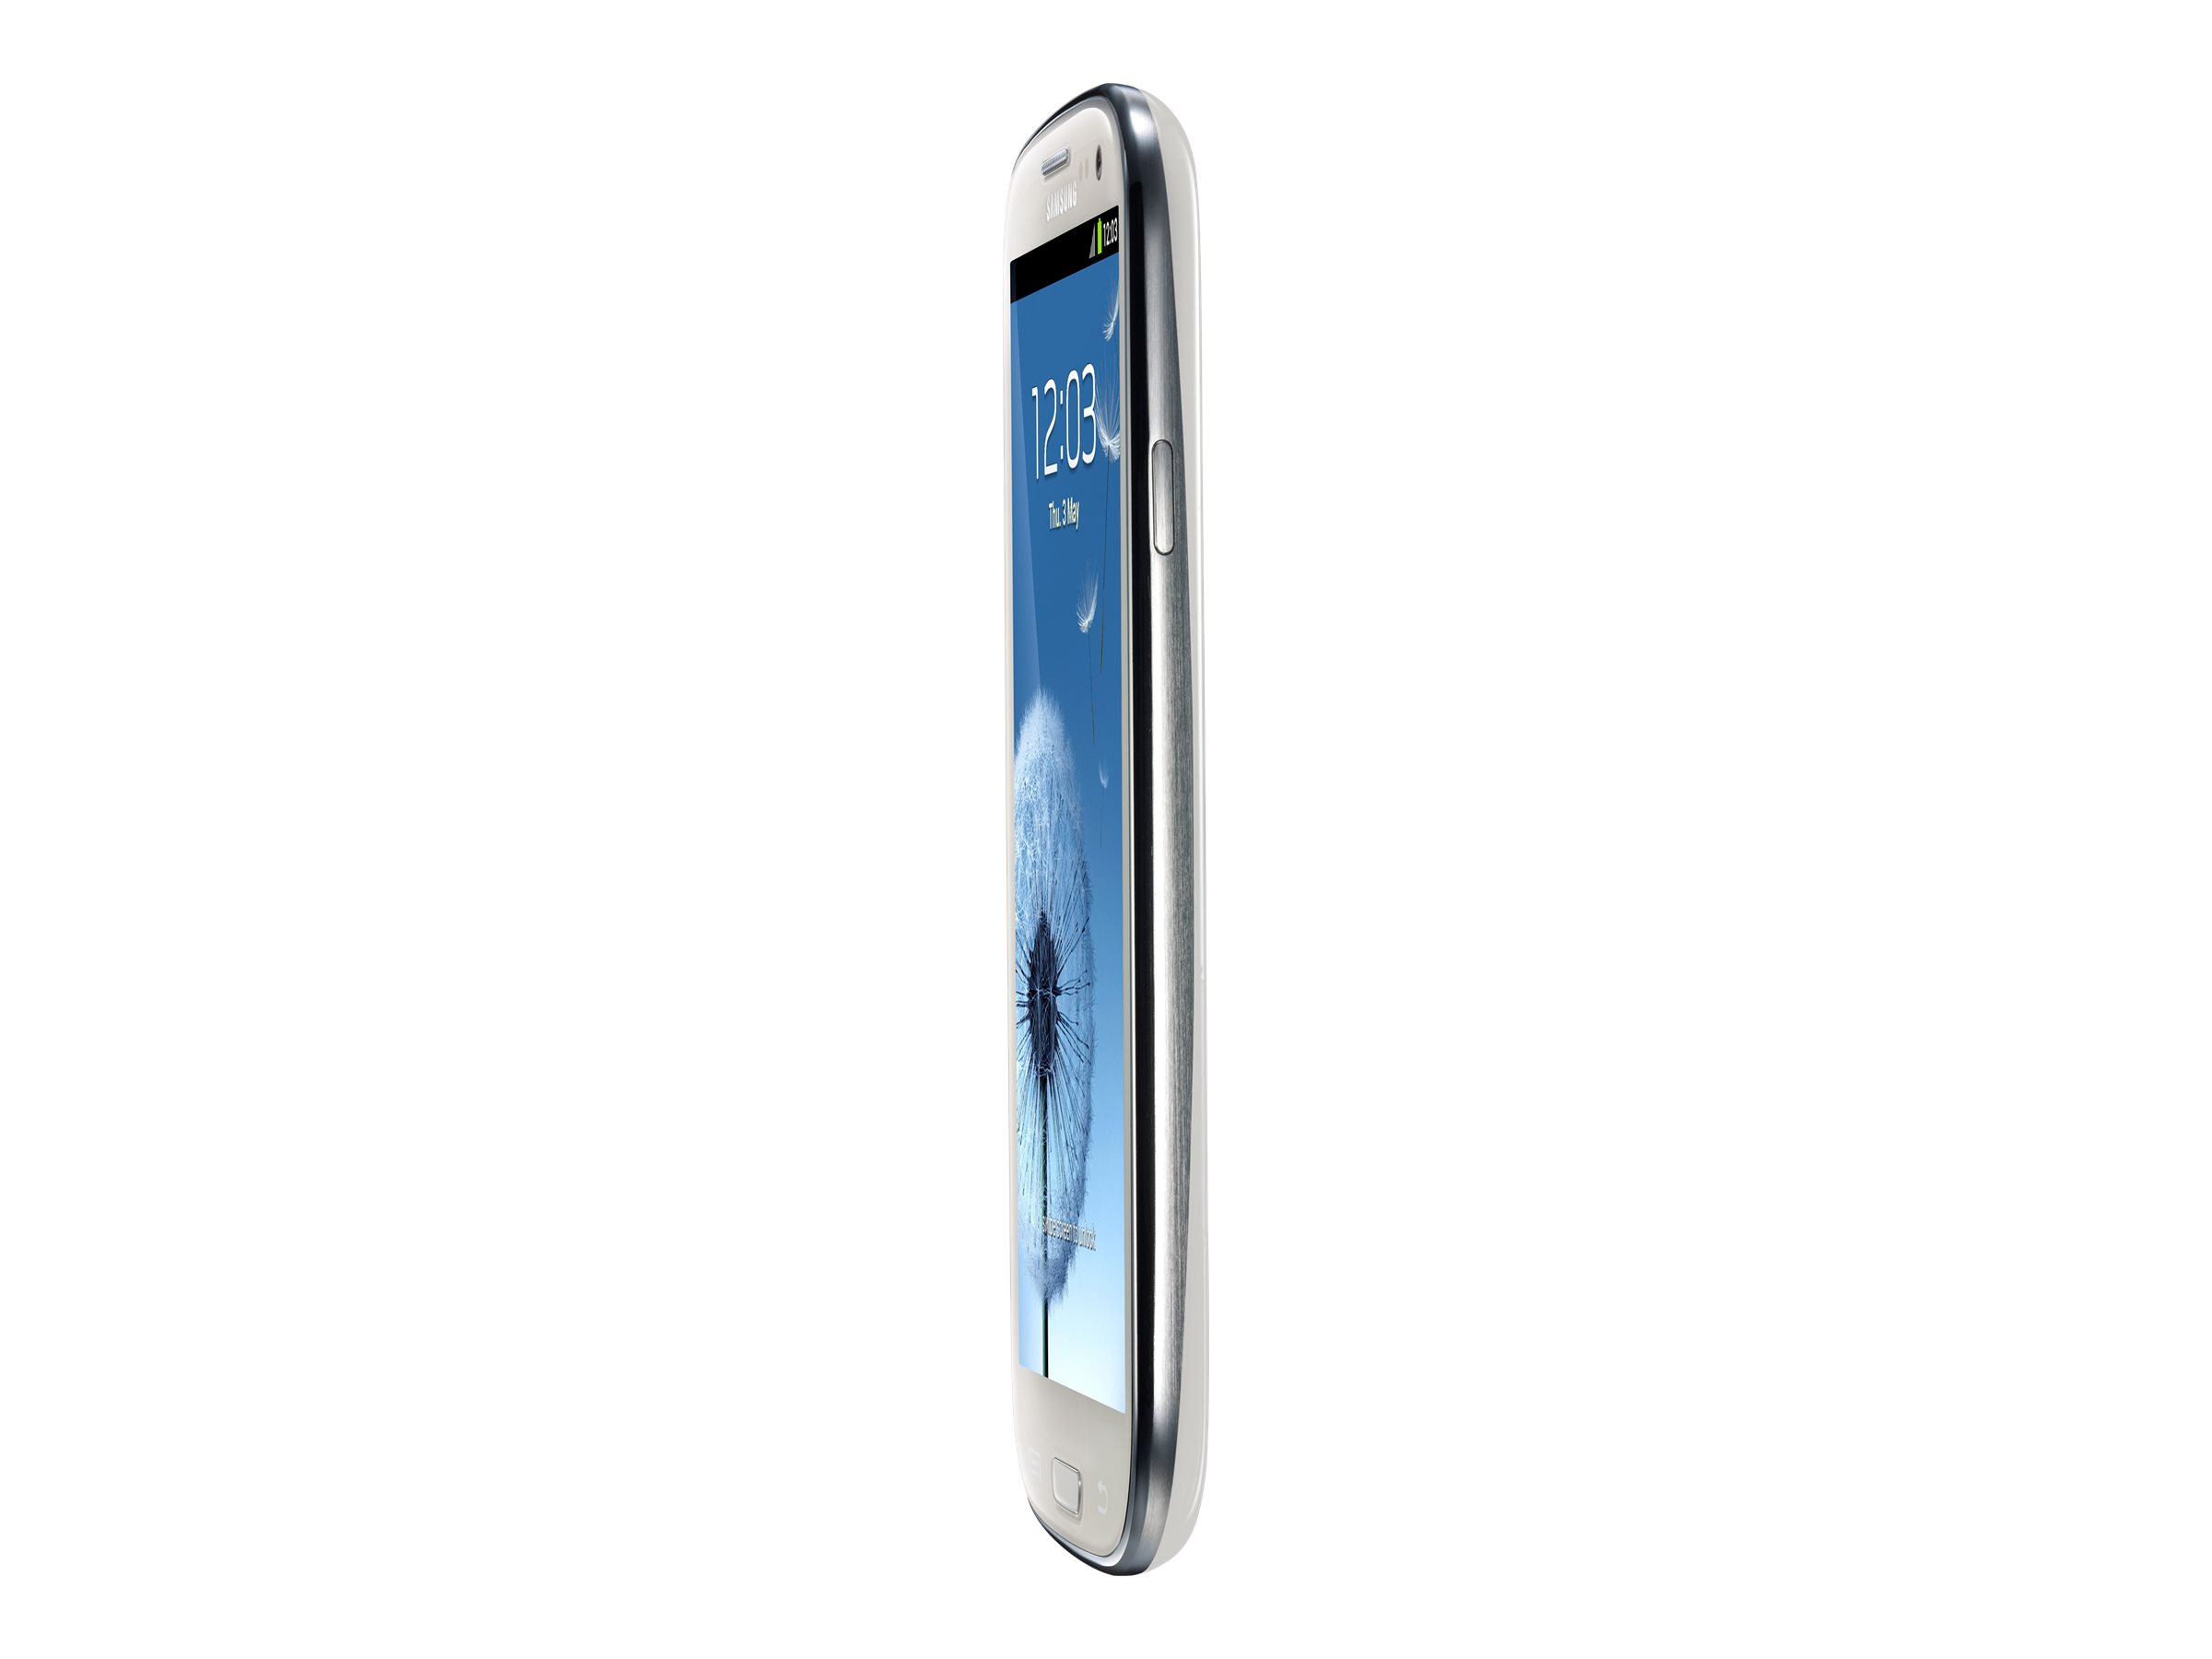 Straight Talk SAMSUNG Galaxy S3, 16GB White - Prepaid Smartphone - image 3 of 14